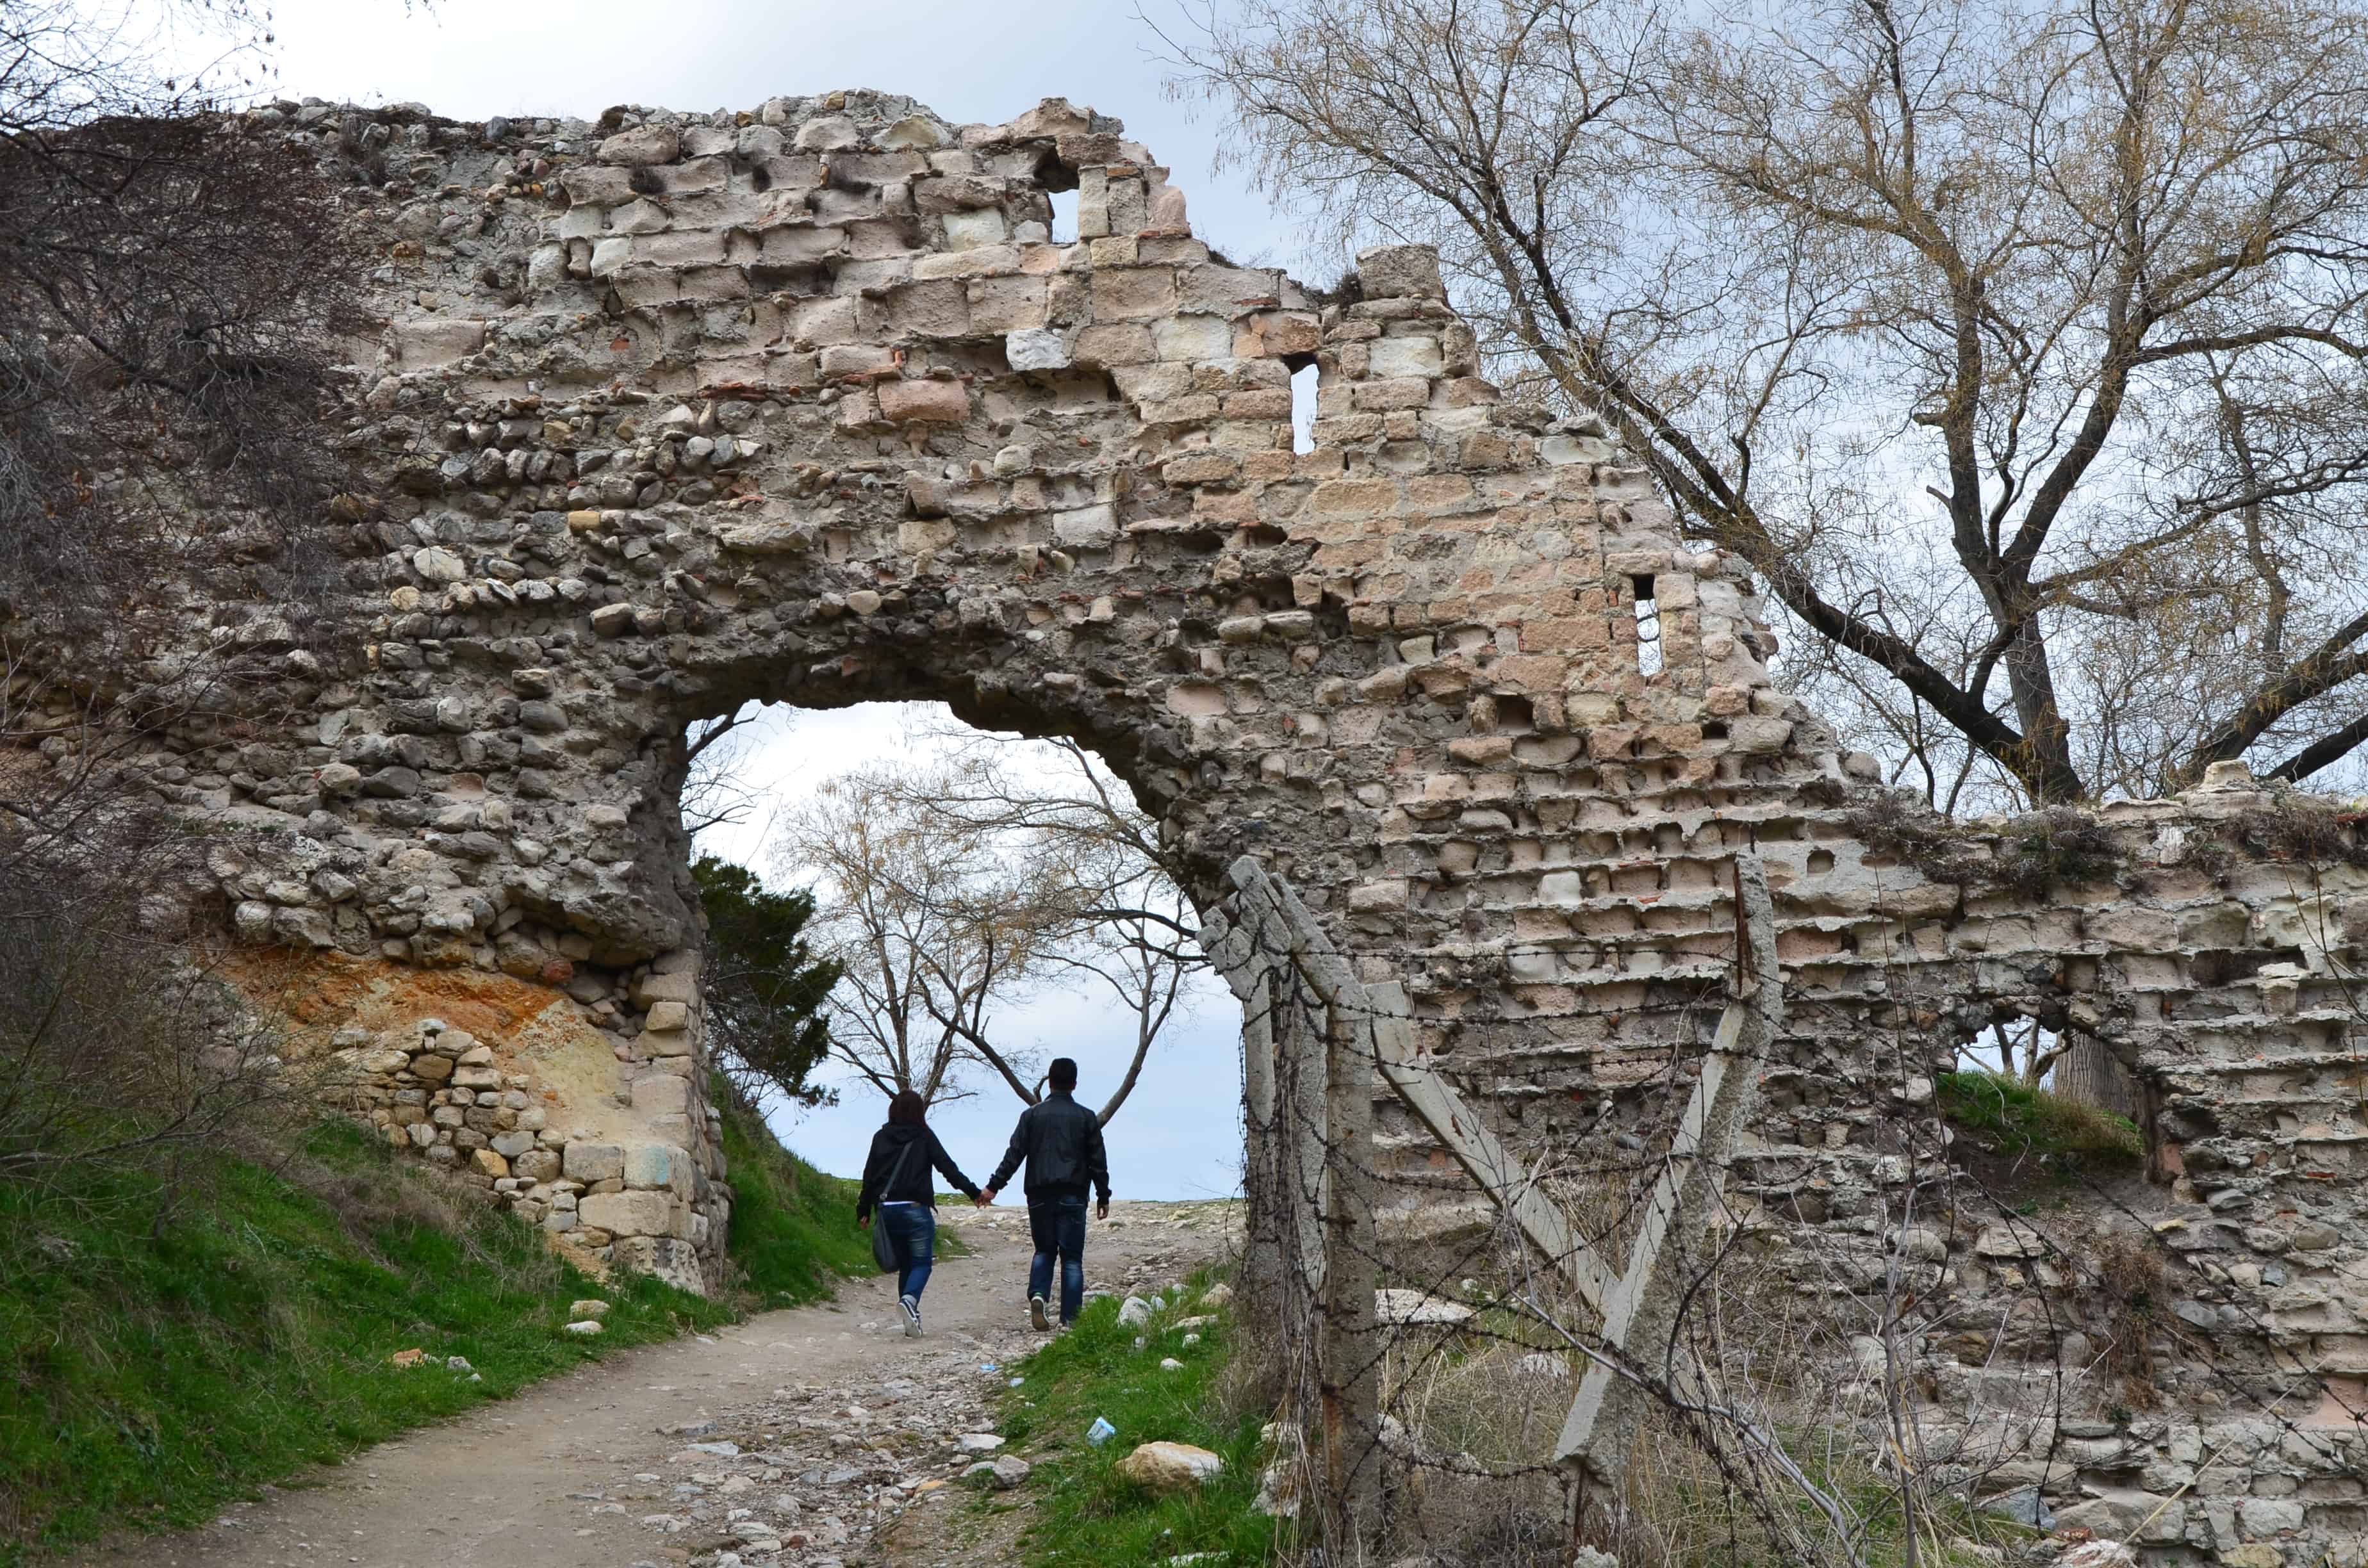 The path up to Kütahya Kalesi in Kütahya, Turkey